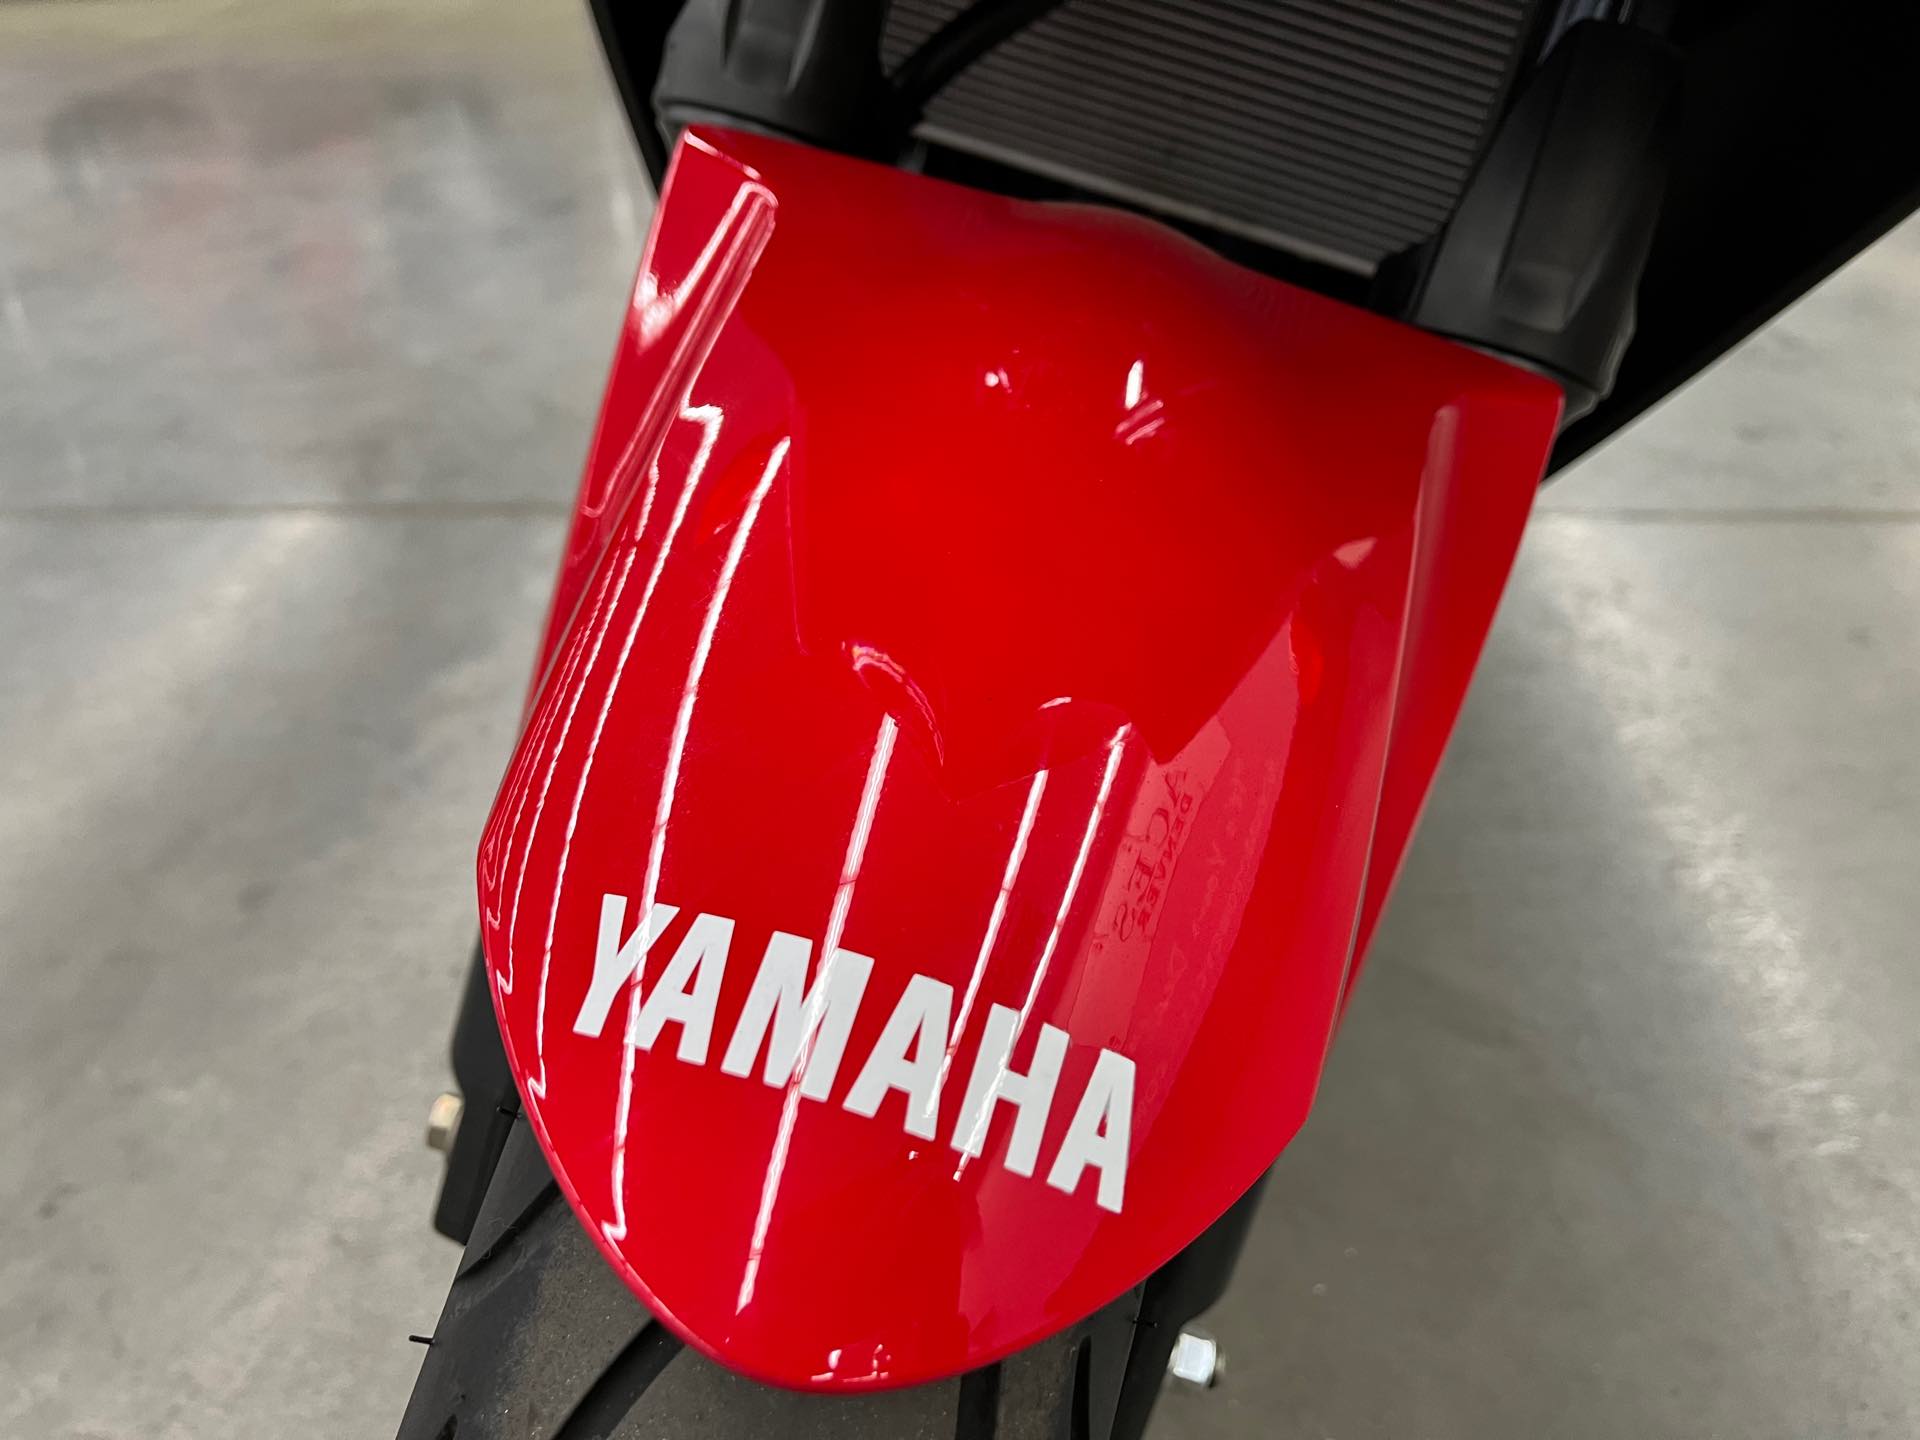 2015 Yamaha YZF R3 at Aces Motorcycles - Denver